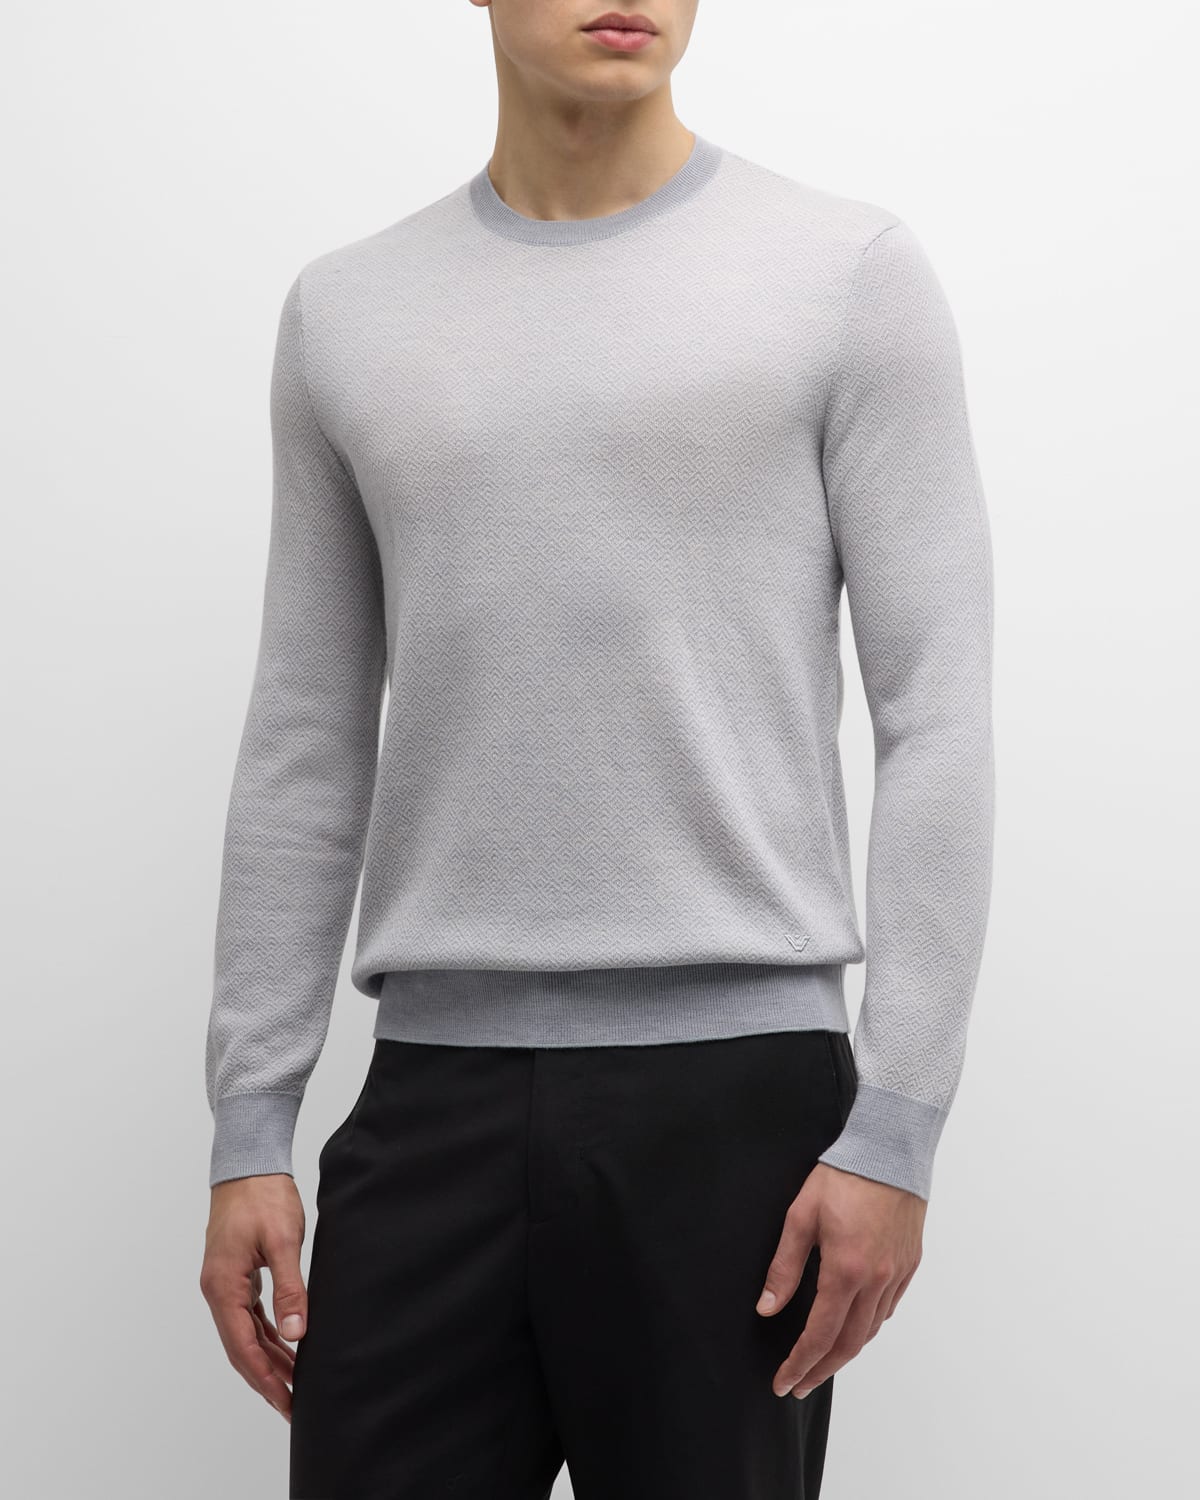 Emporio Armani Men's Wool Micro-geometric Knit Crewneck Sweater In Solid Light